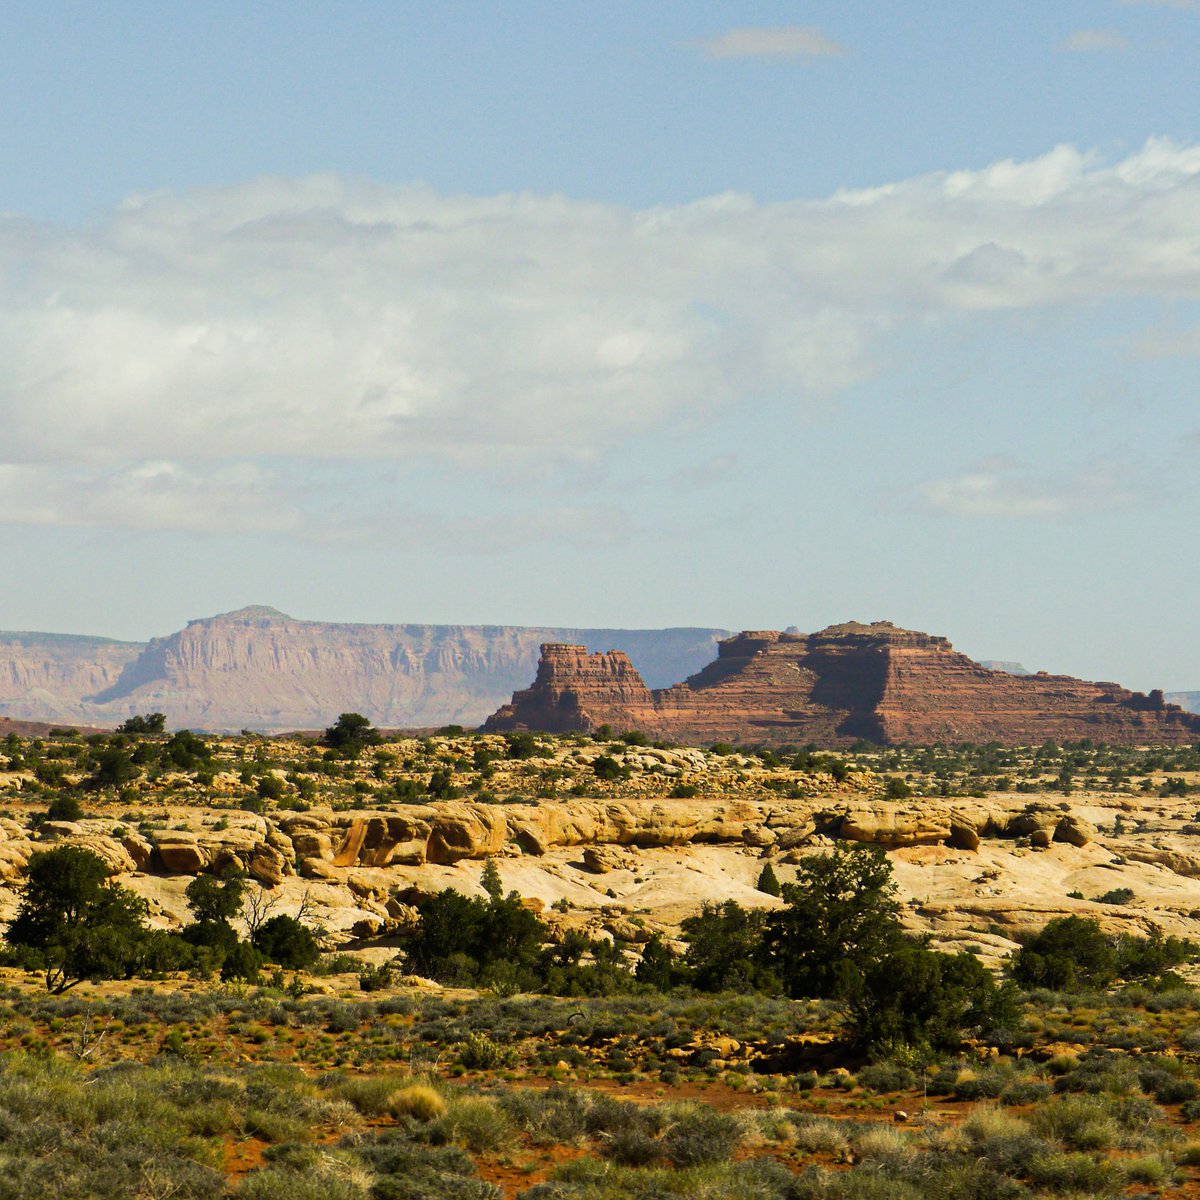 Scenic image of canyonlands in Utah